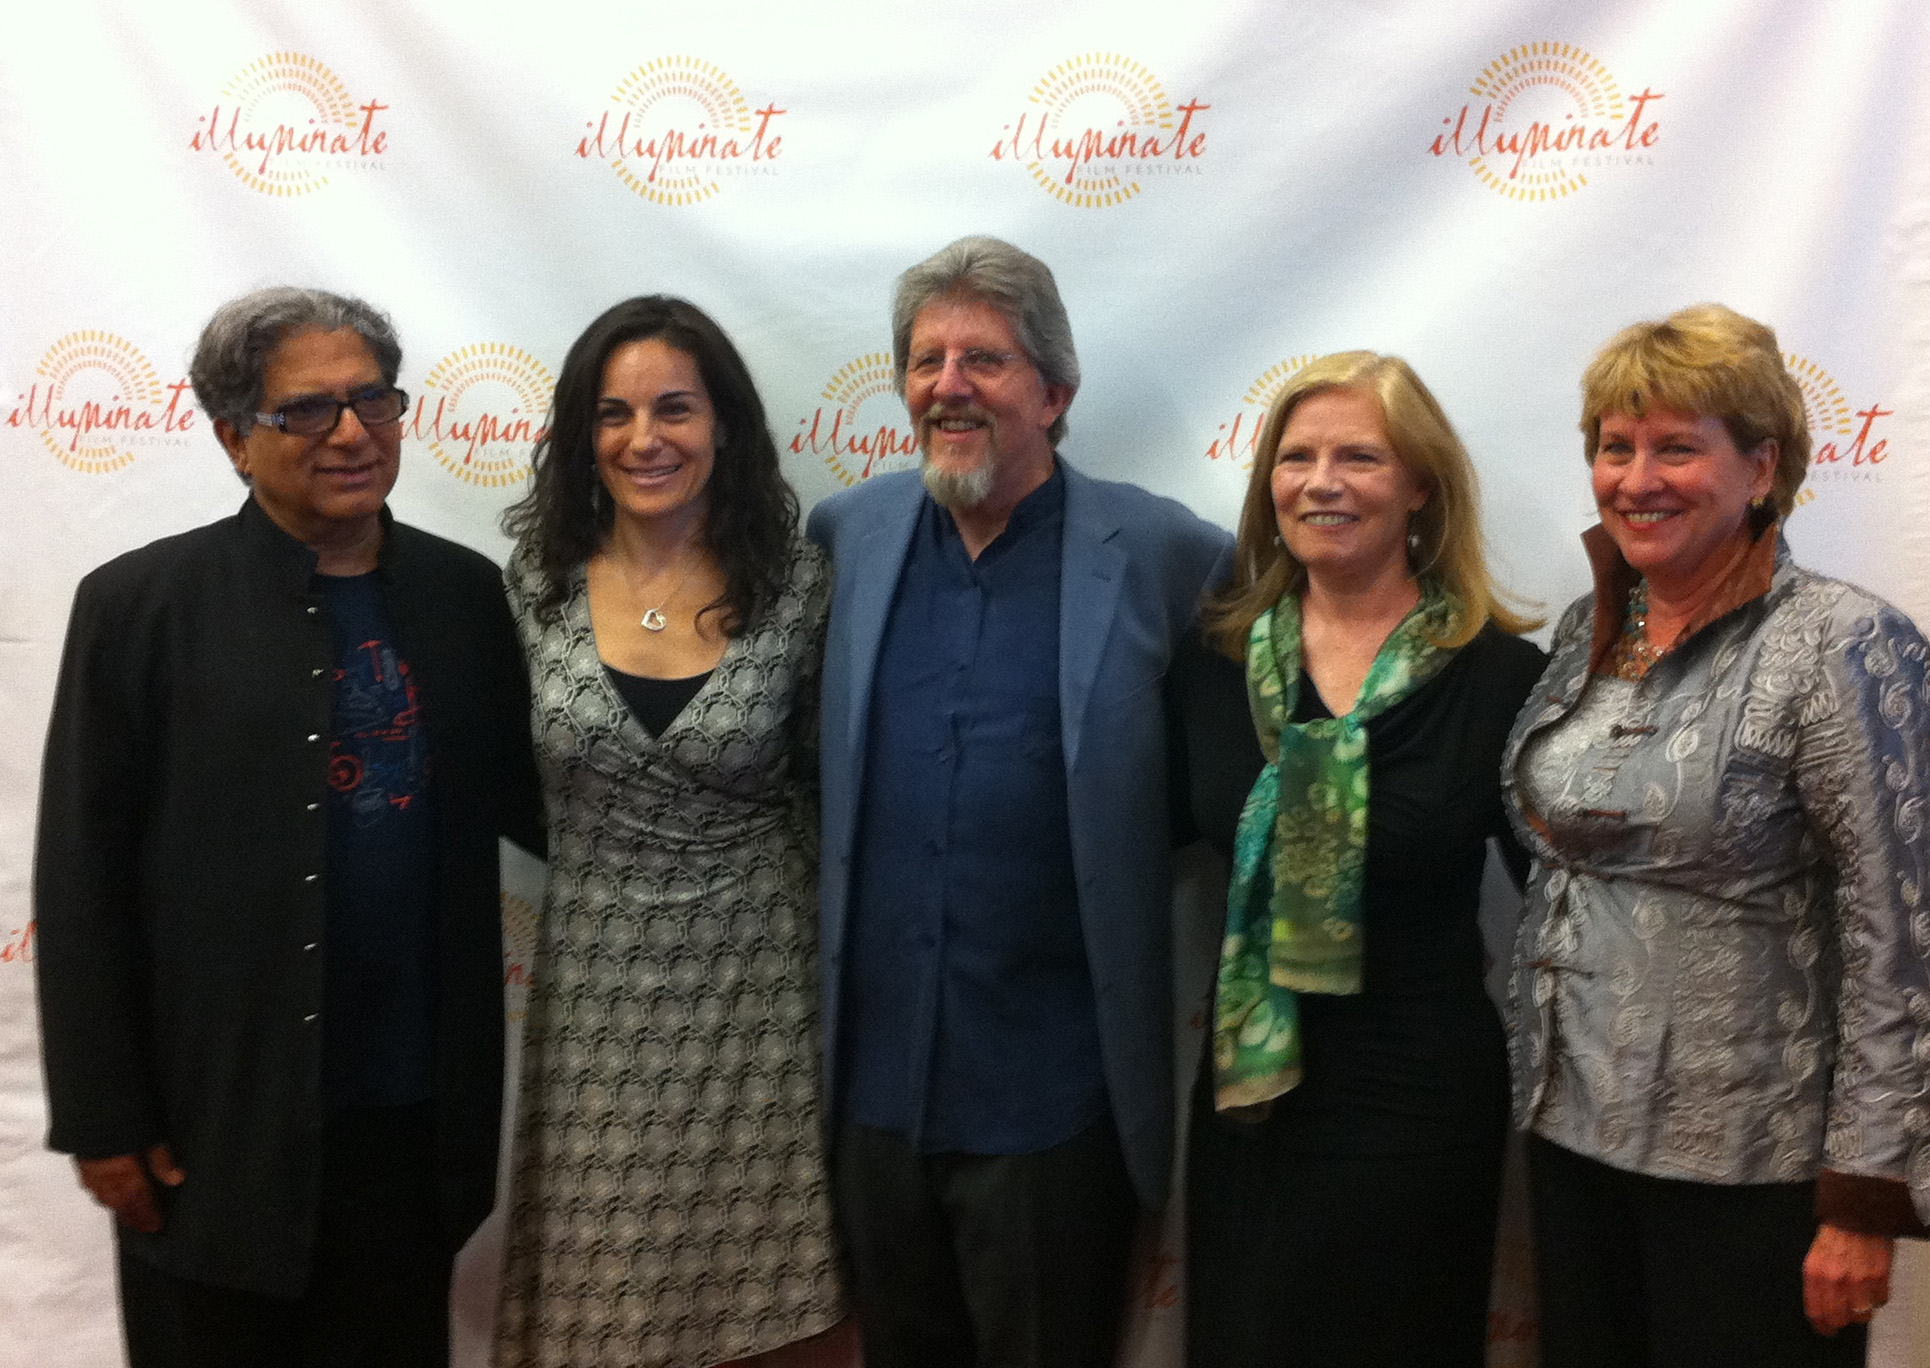 At Illuminate Film Festival with Deepak Chopra, Danette, Wolpert, Mark Krigbaum, Angela Murphy and Marilyn Schlitz